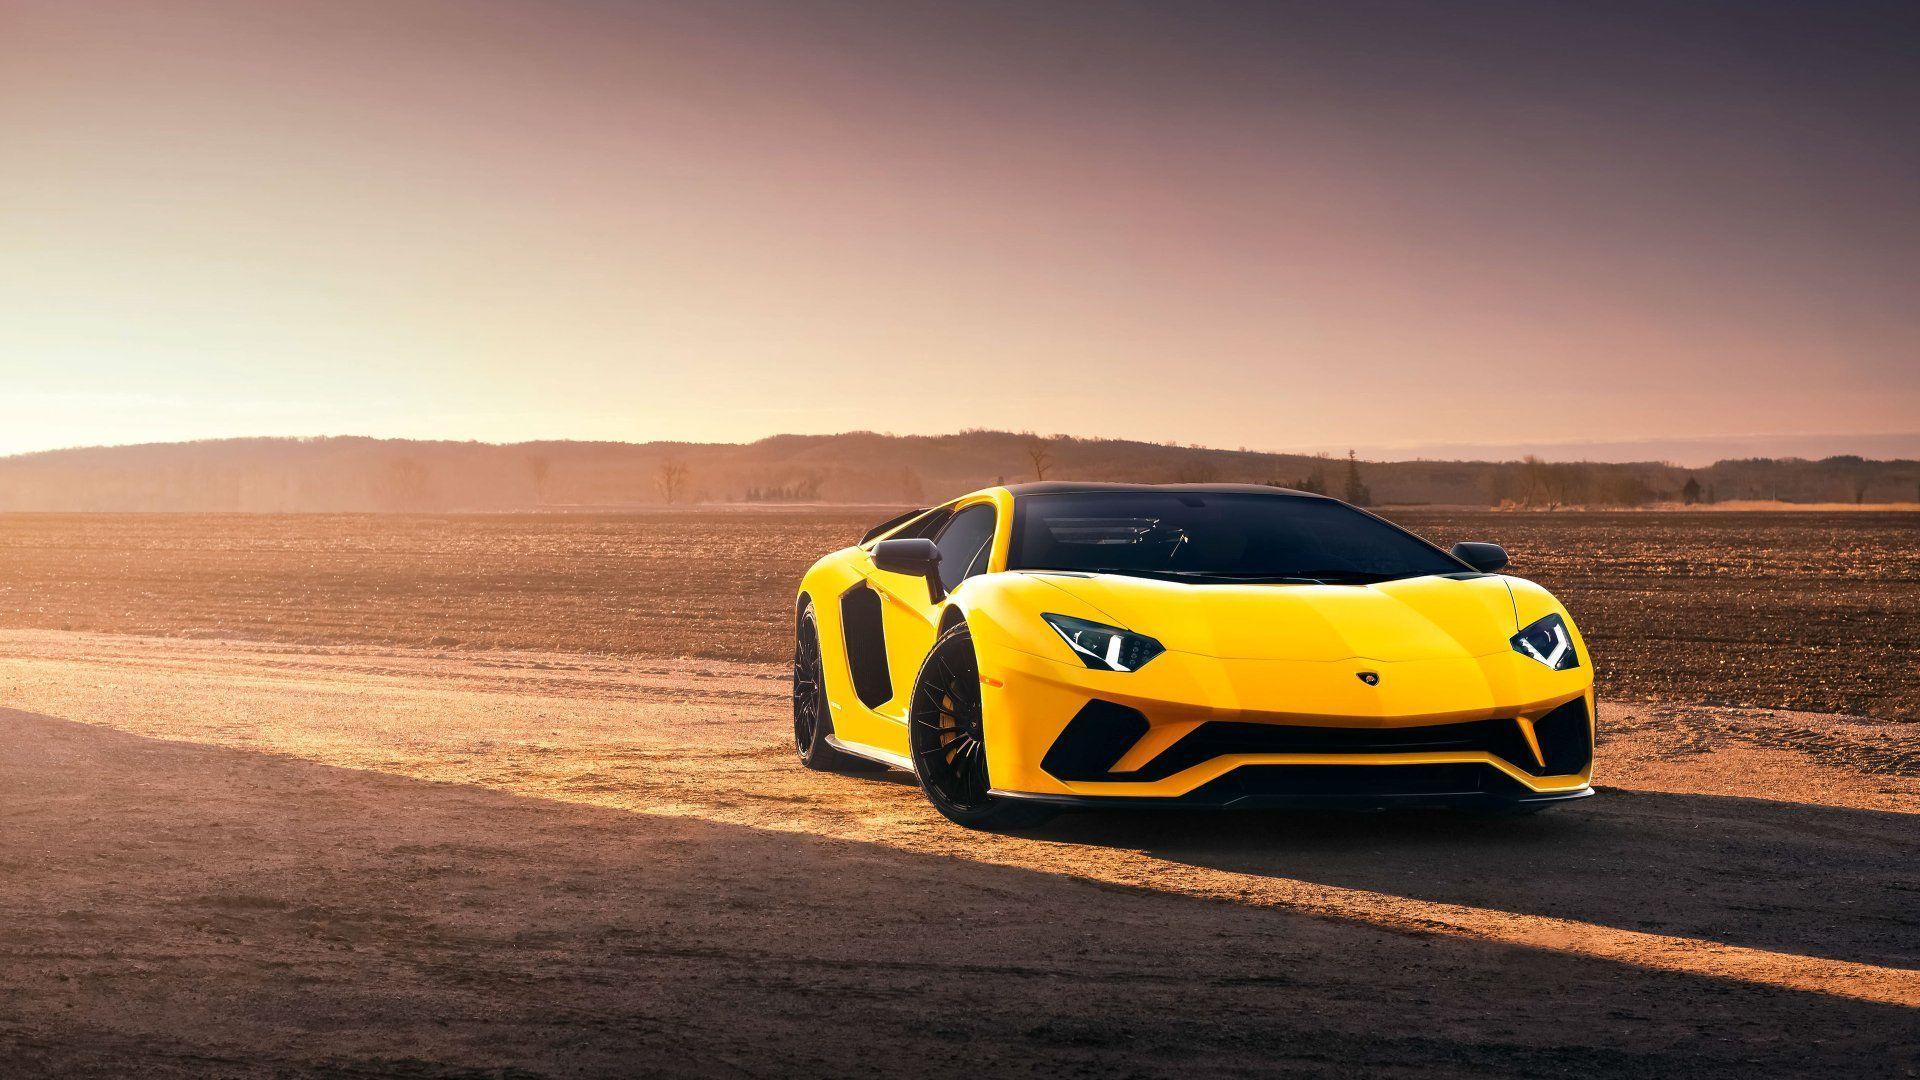 Lamborghini On Road Wallpapers - Top Free Lamborghini On Road